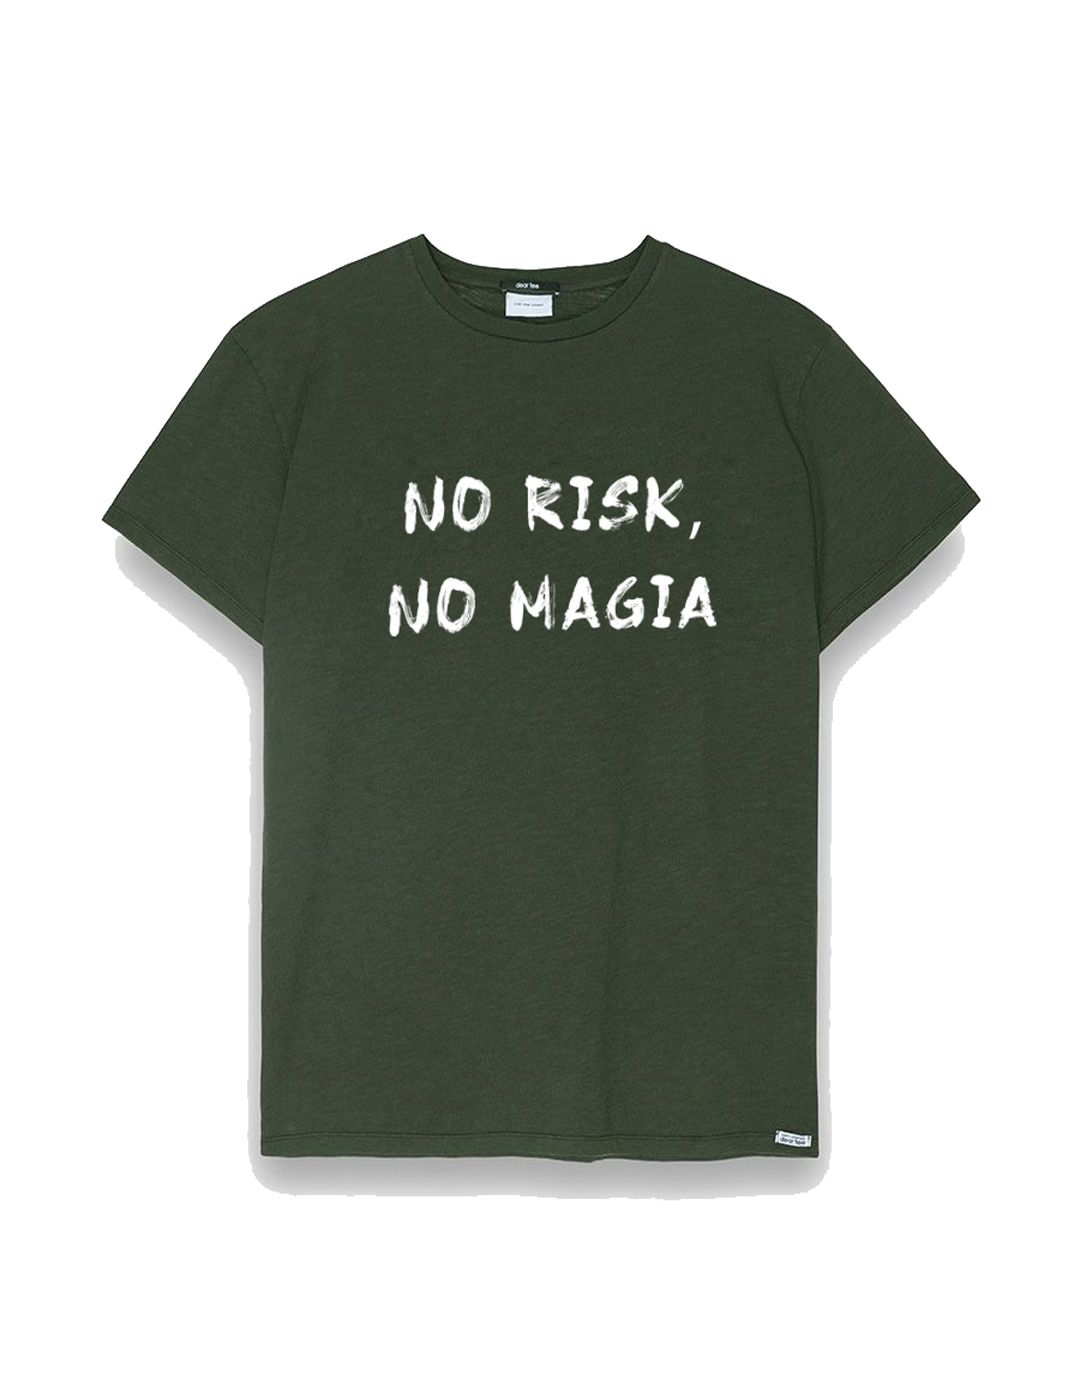 Camiseta Dear Tee Hombre No Risk No Magia